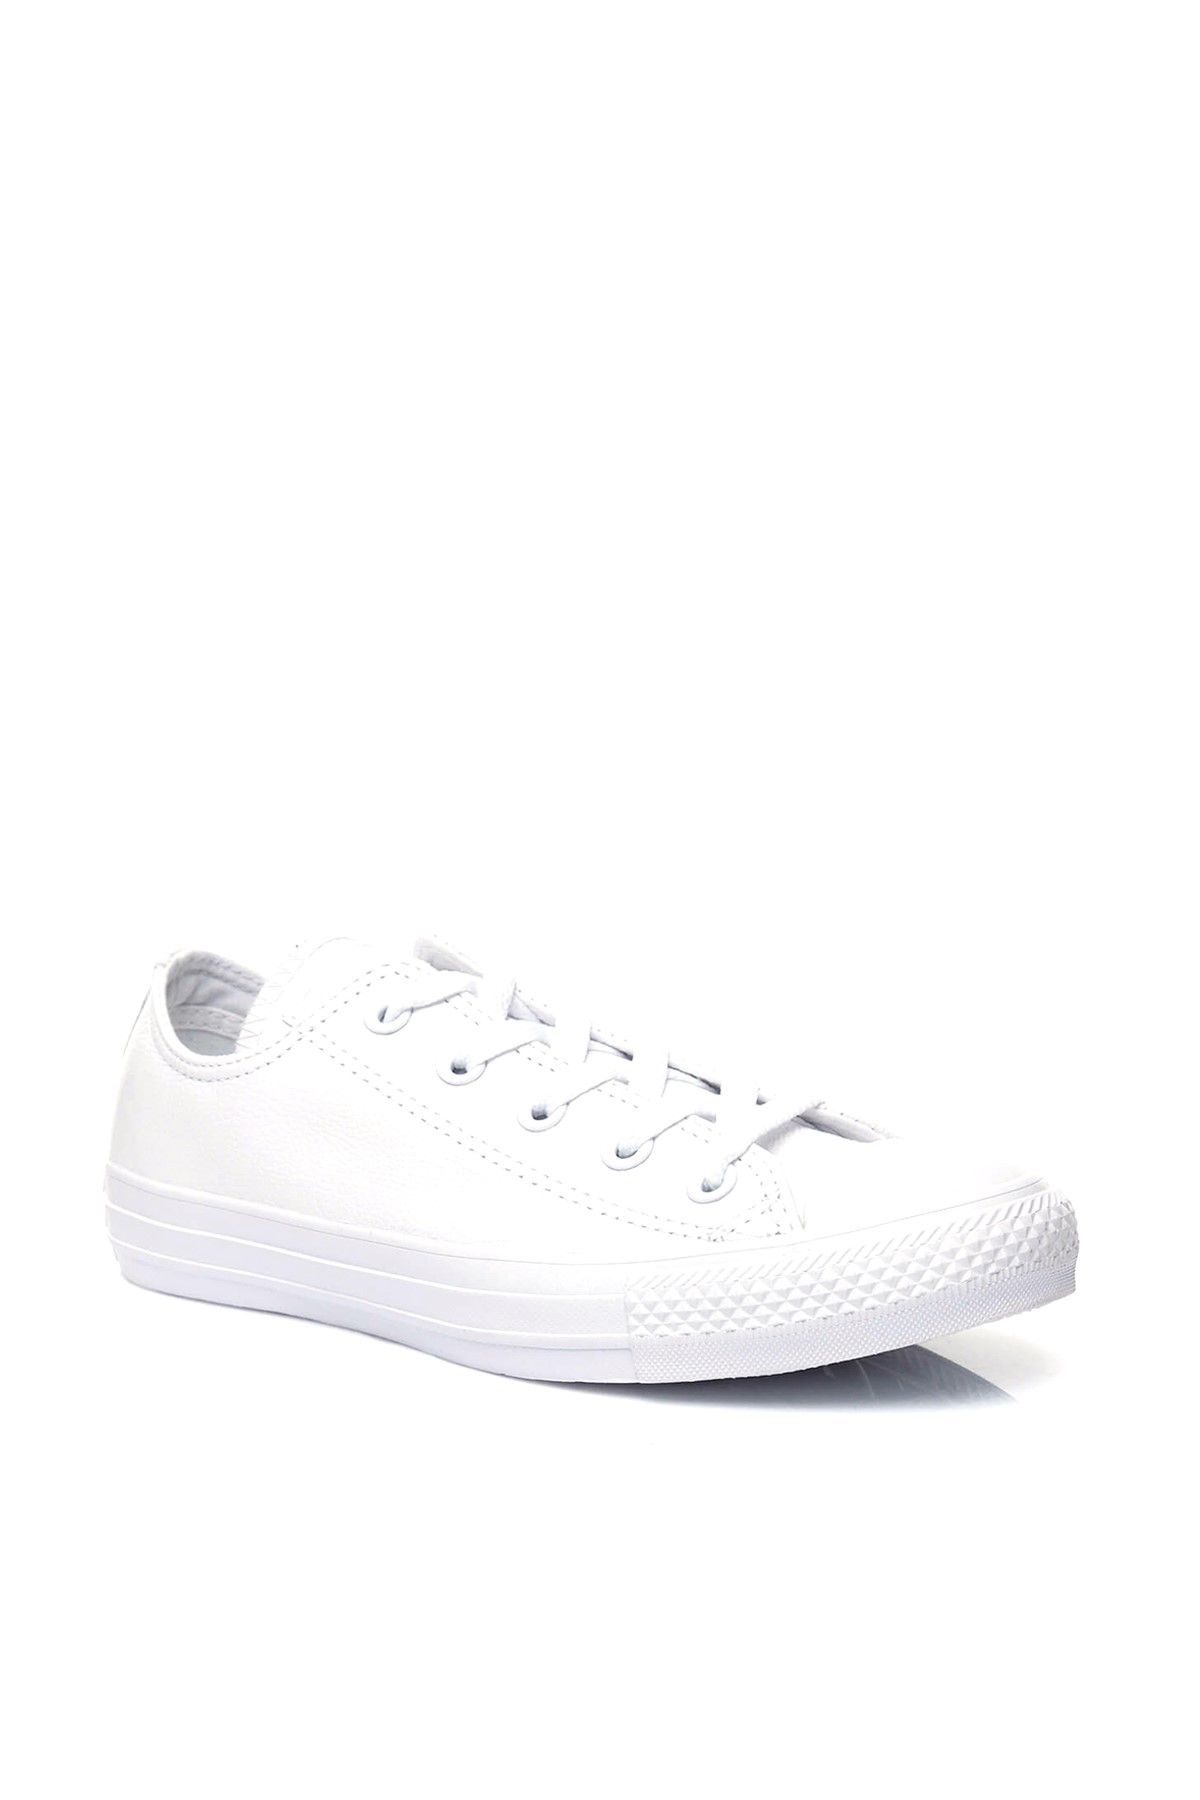 Converse Chuck Taylor All Star Tonal Leather (HAKİKİ DERİ) Unisex Beyaz Sneaker